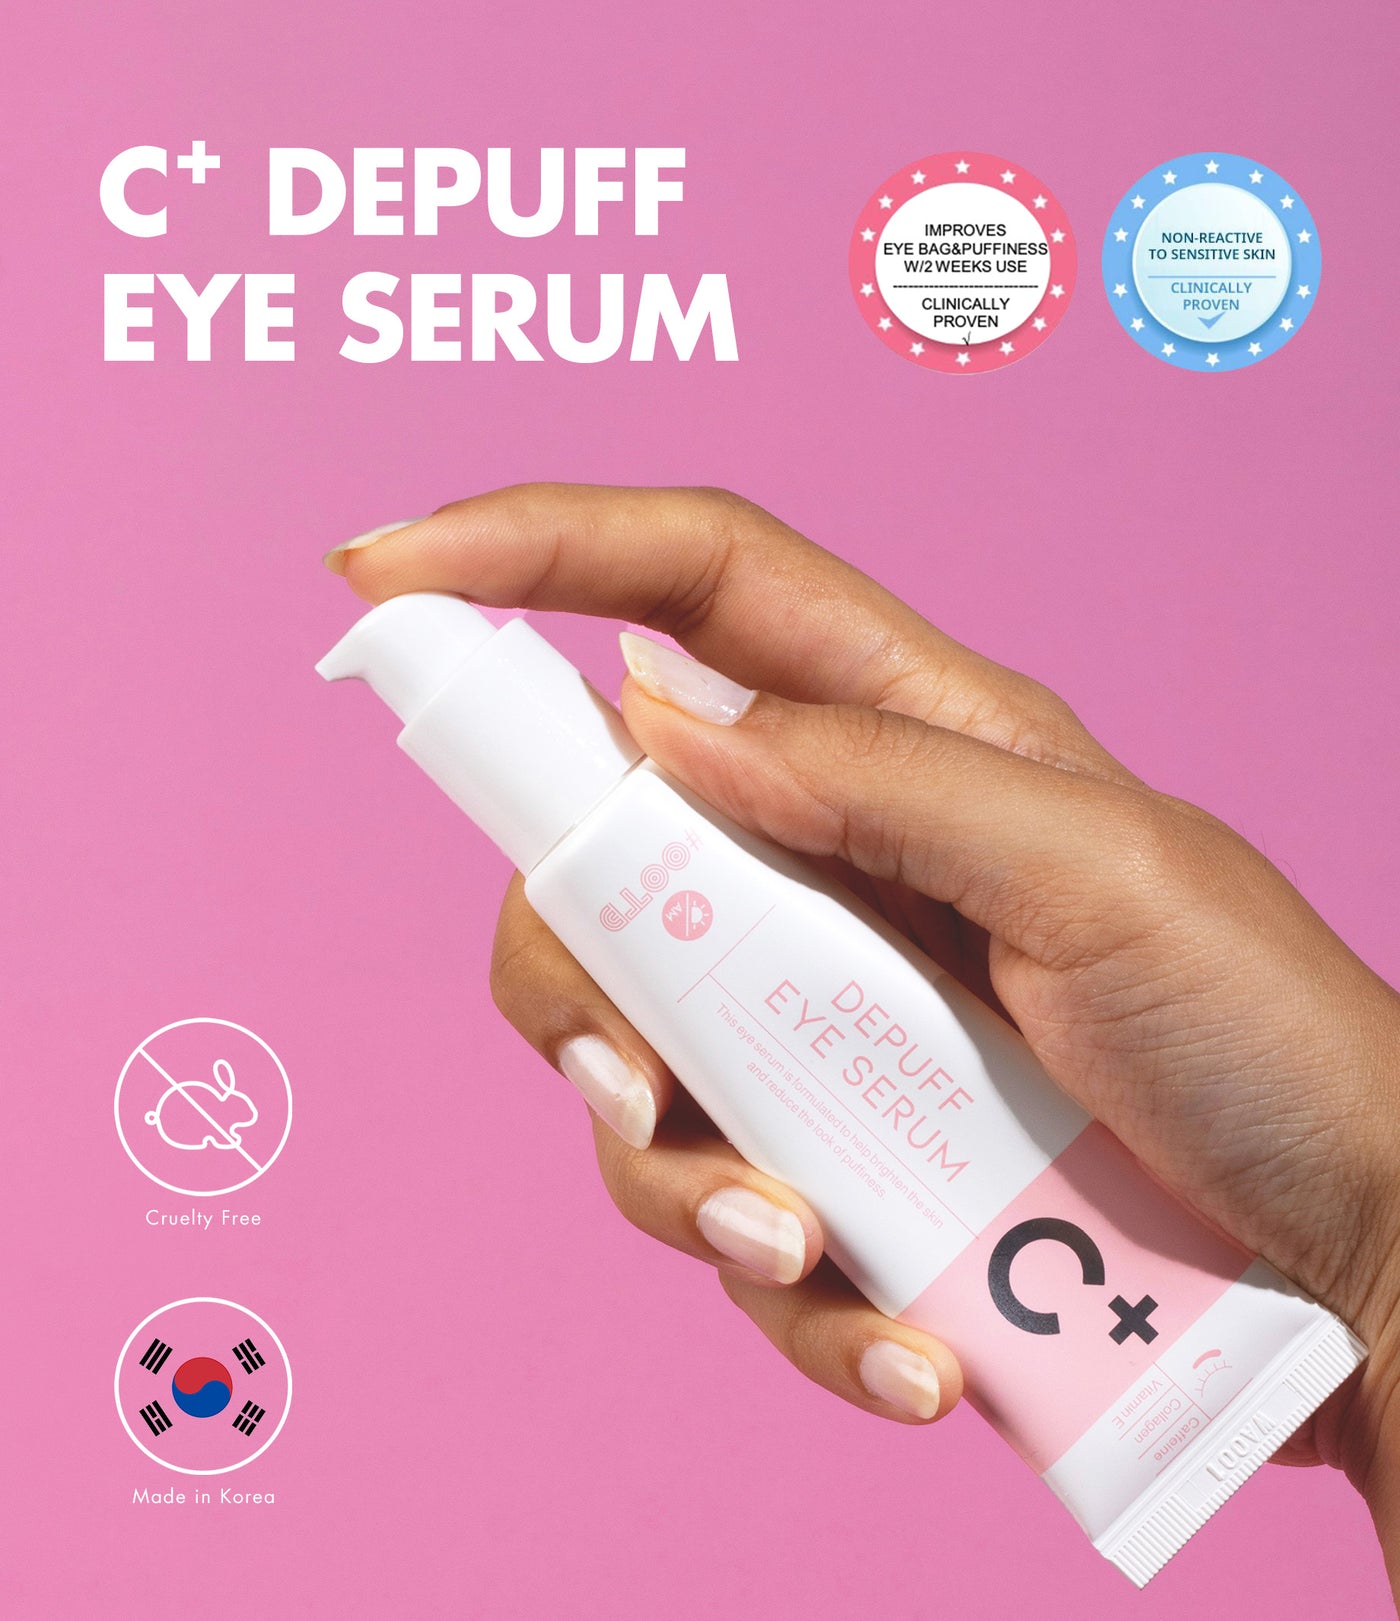 OOTD Depuff Eye Serum (C+)